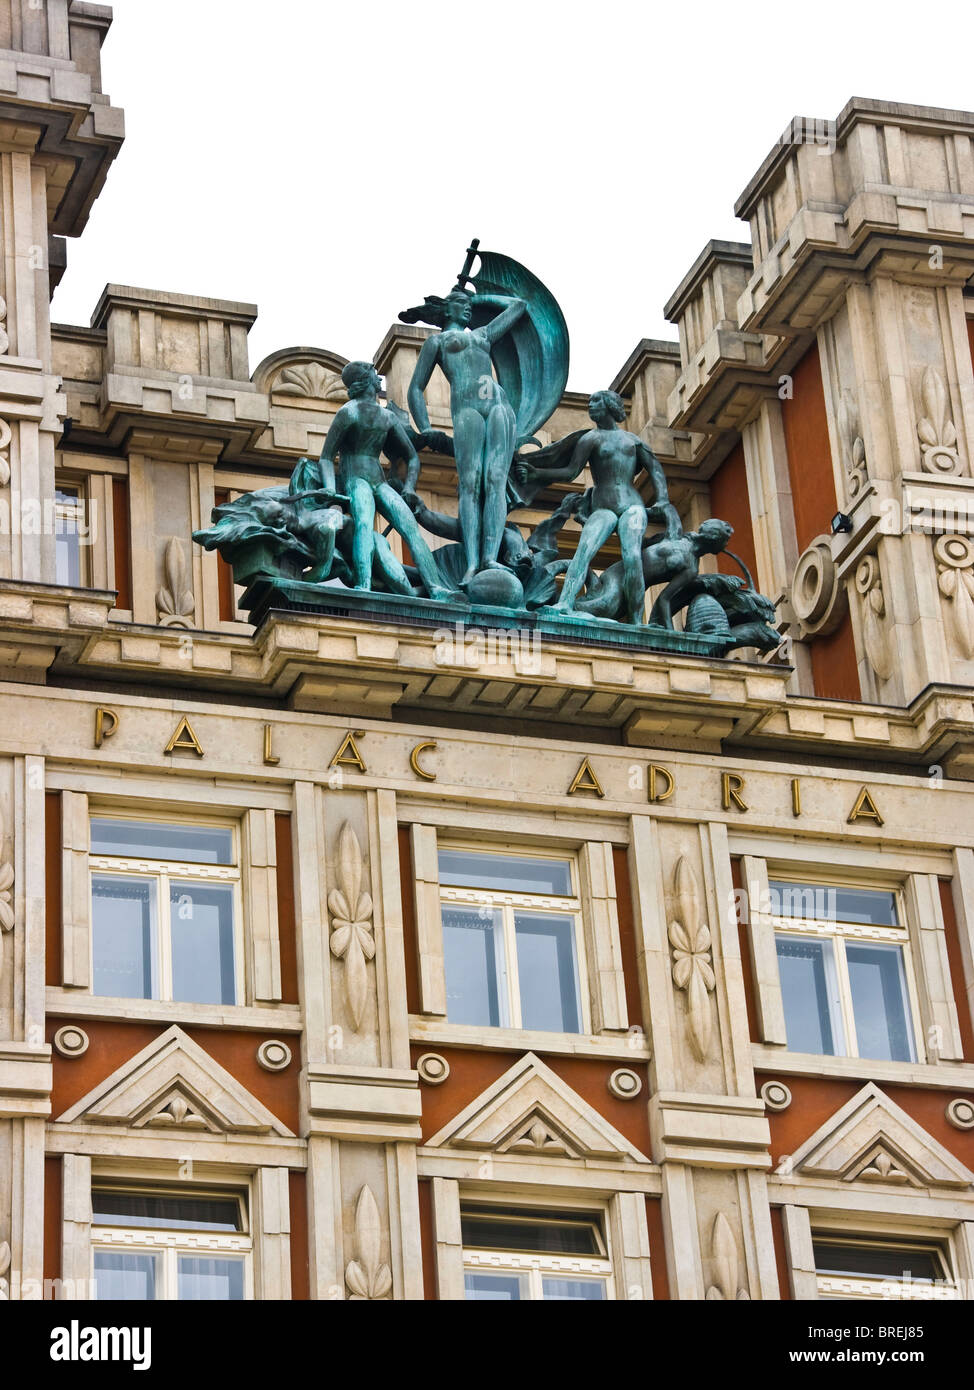 Sculpture group Cubist Adria Palace building Prague Czech Republic Europe Stock Photo